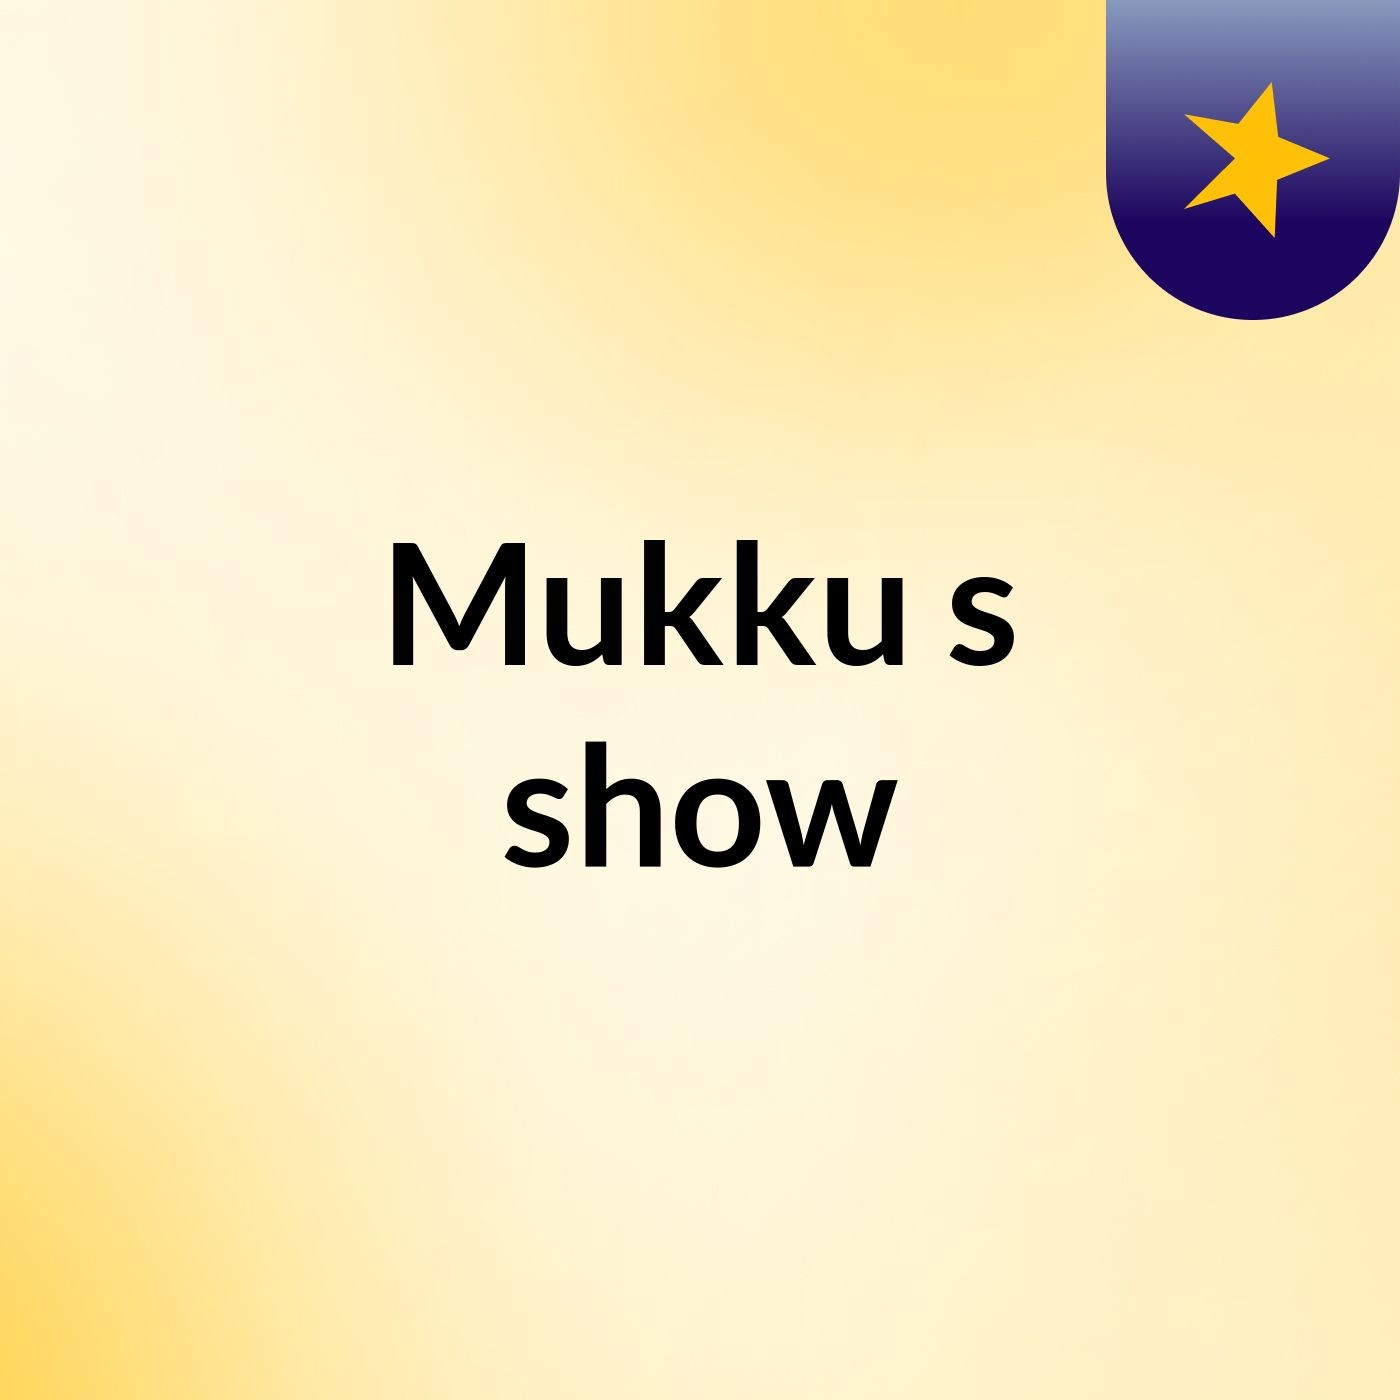 Mukku's show